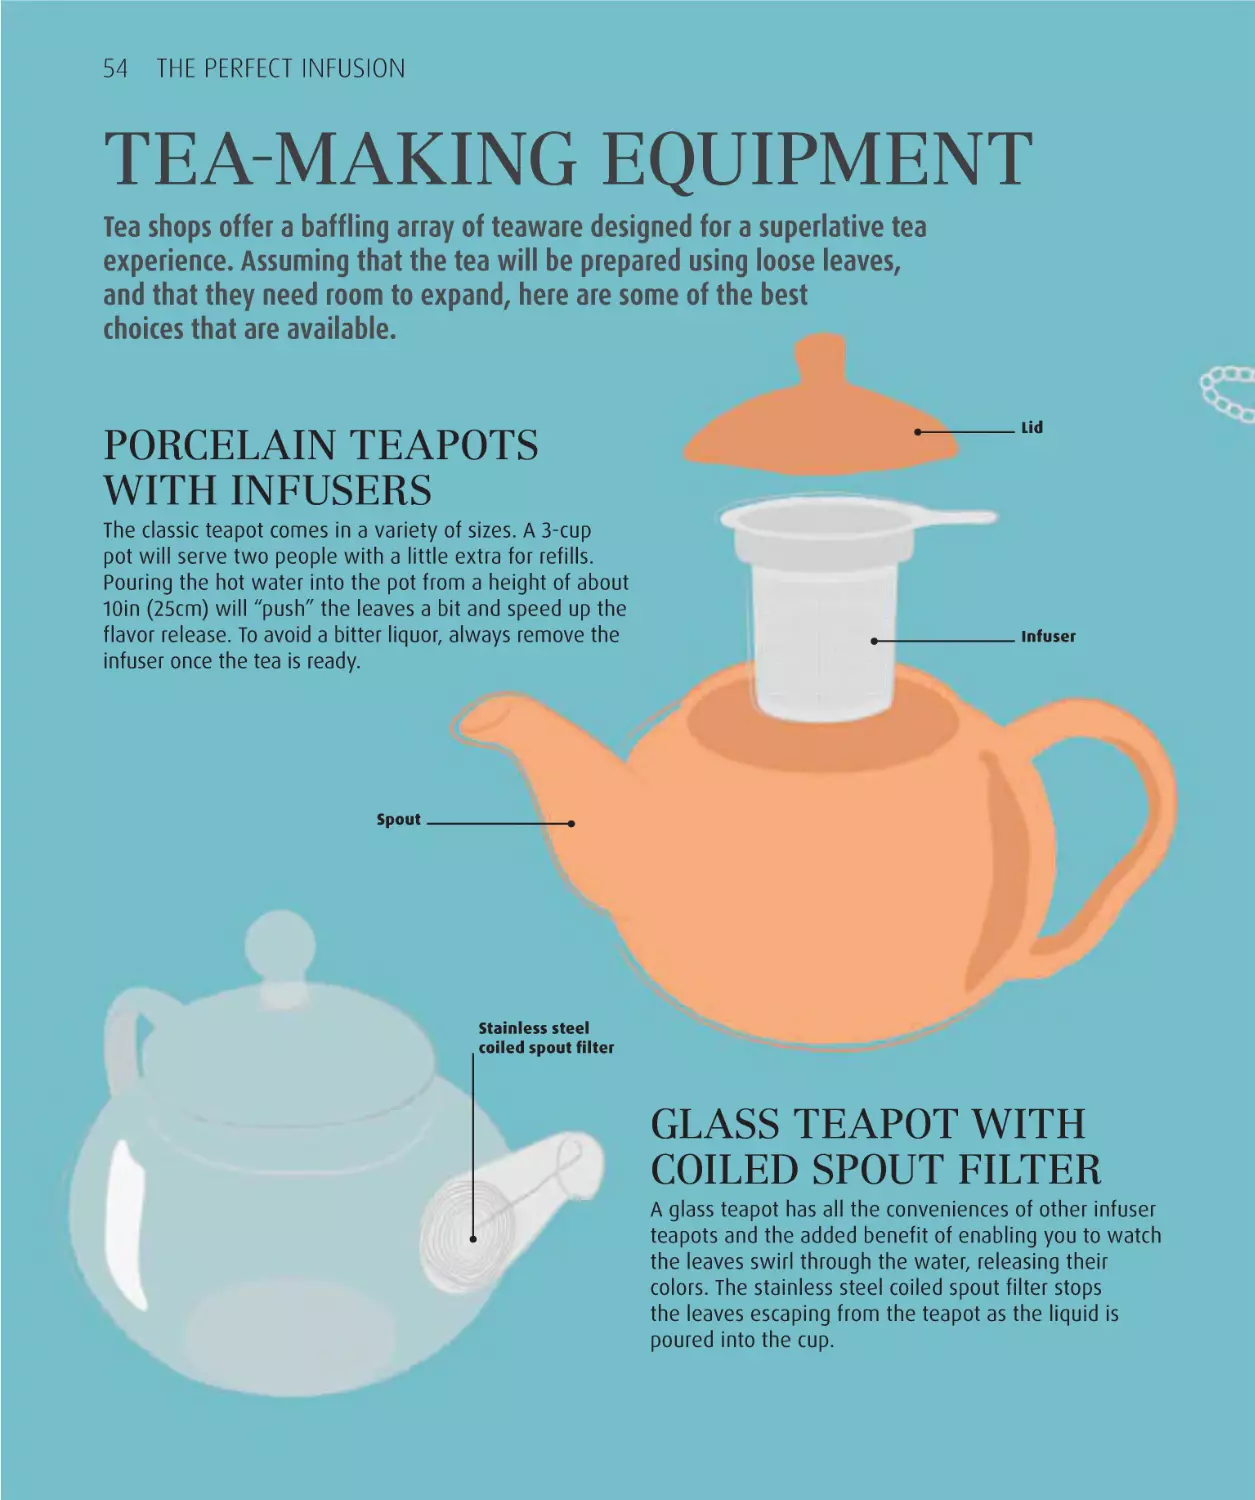 Tea-making equipment 54